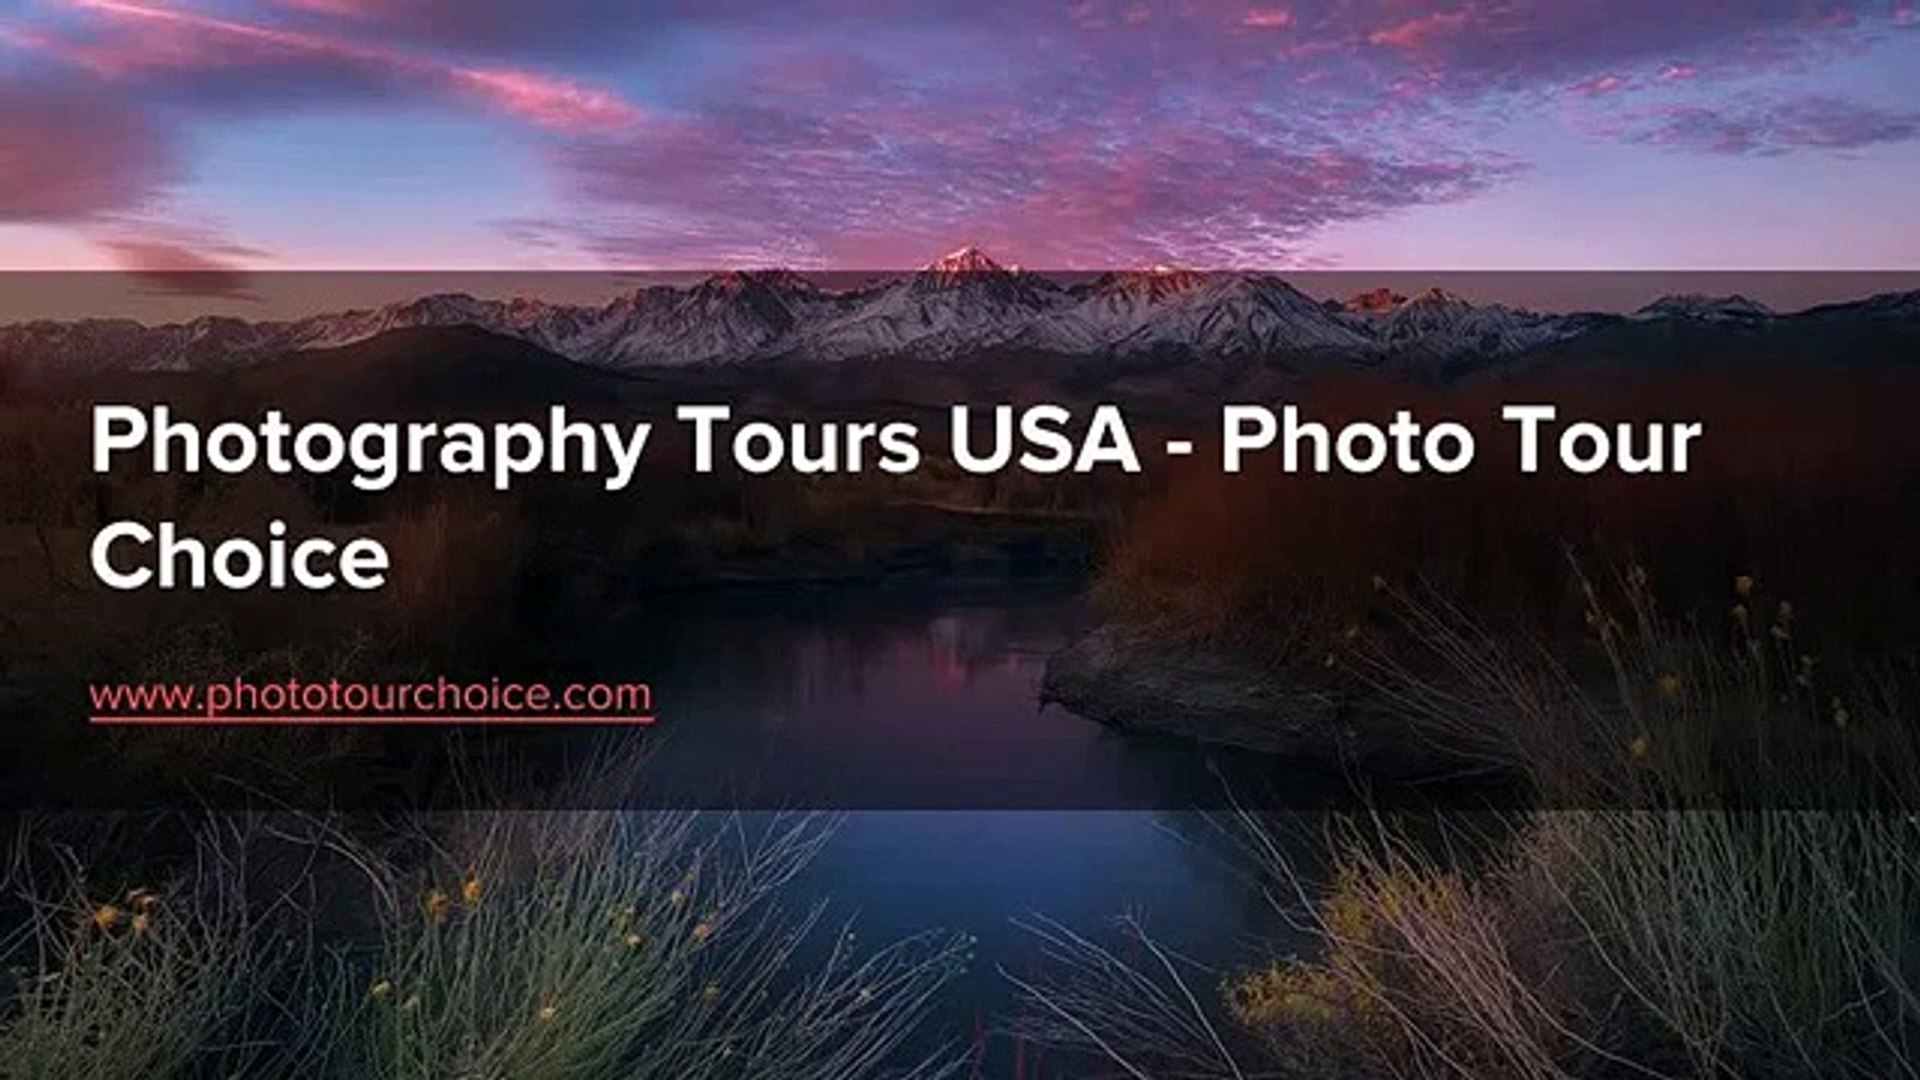 Photography Tours USA - Photo Tour Choice